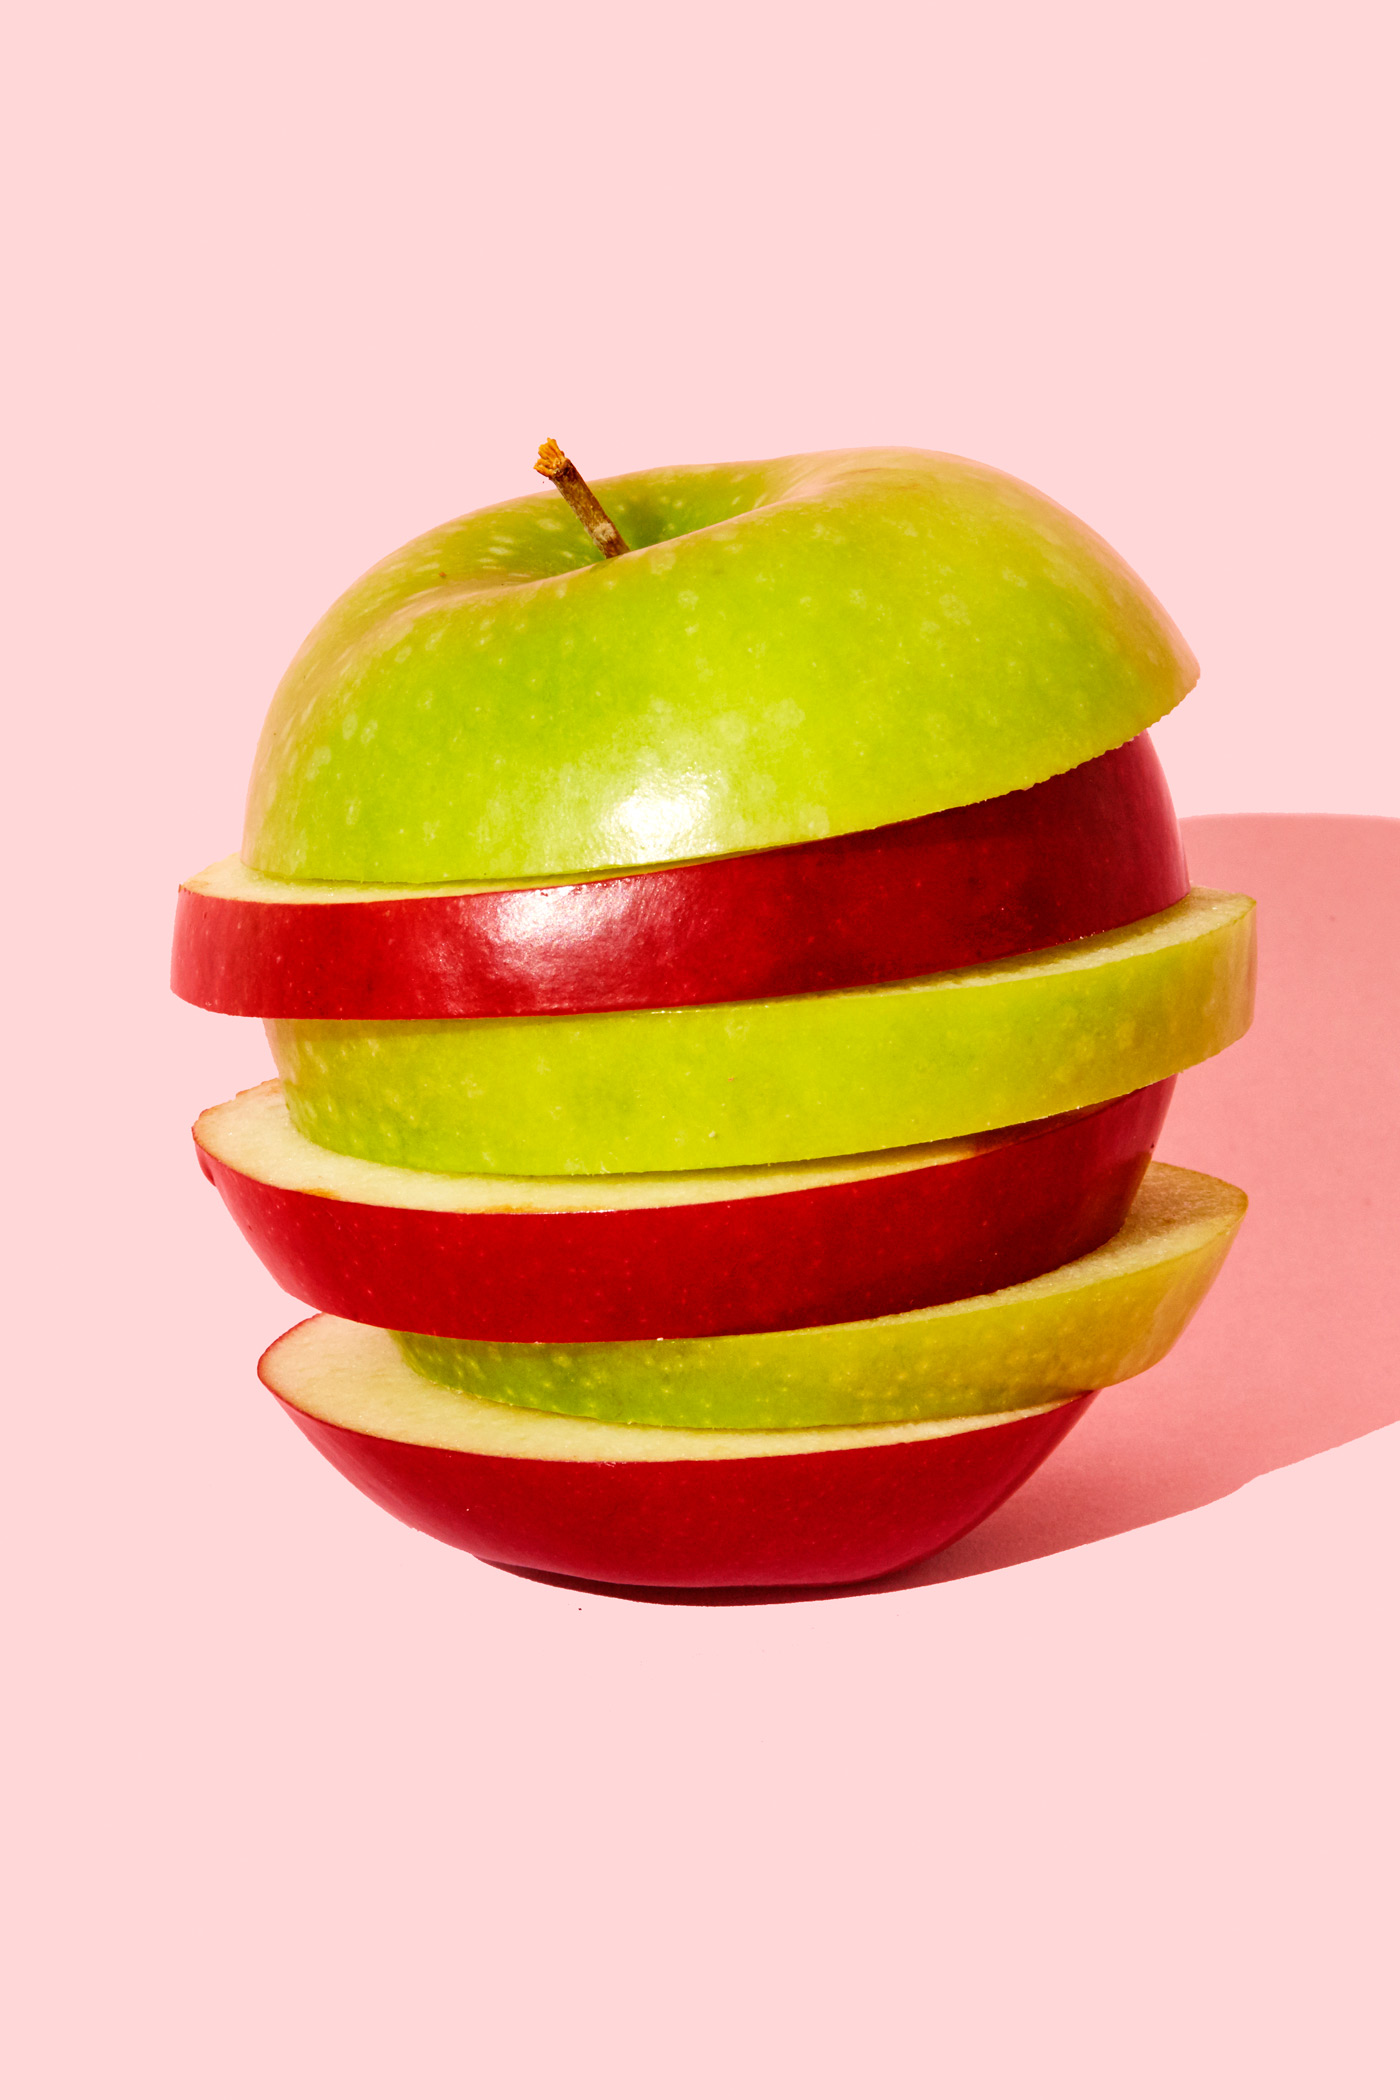 healthiest foods, health food, diet, nutrition, time.com stock, apple